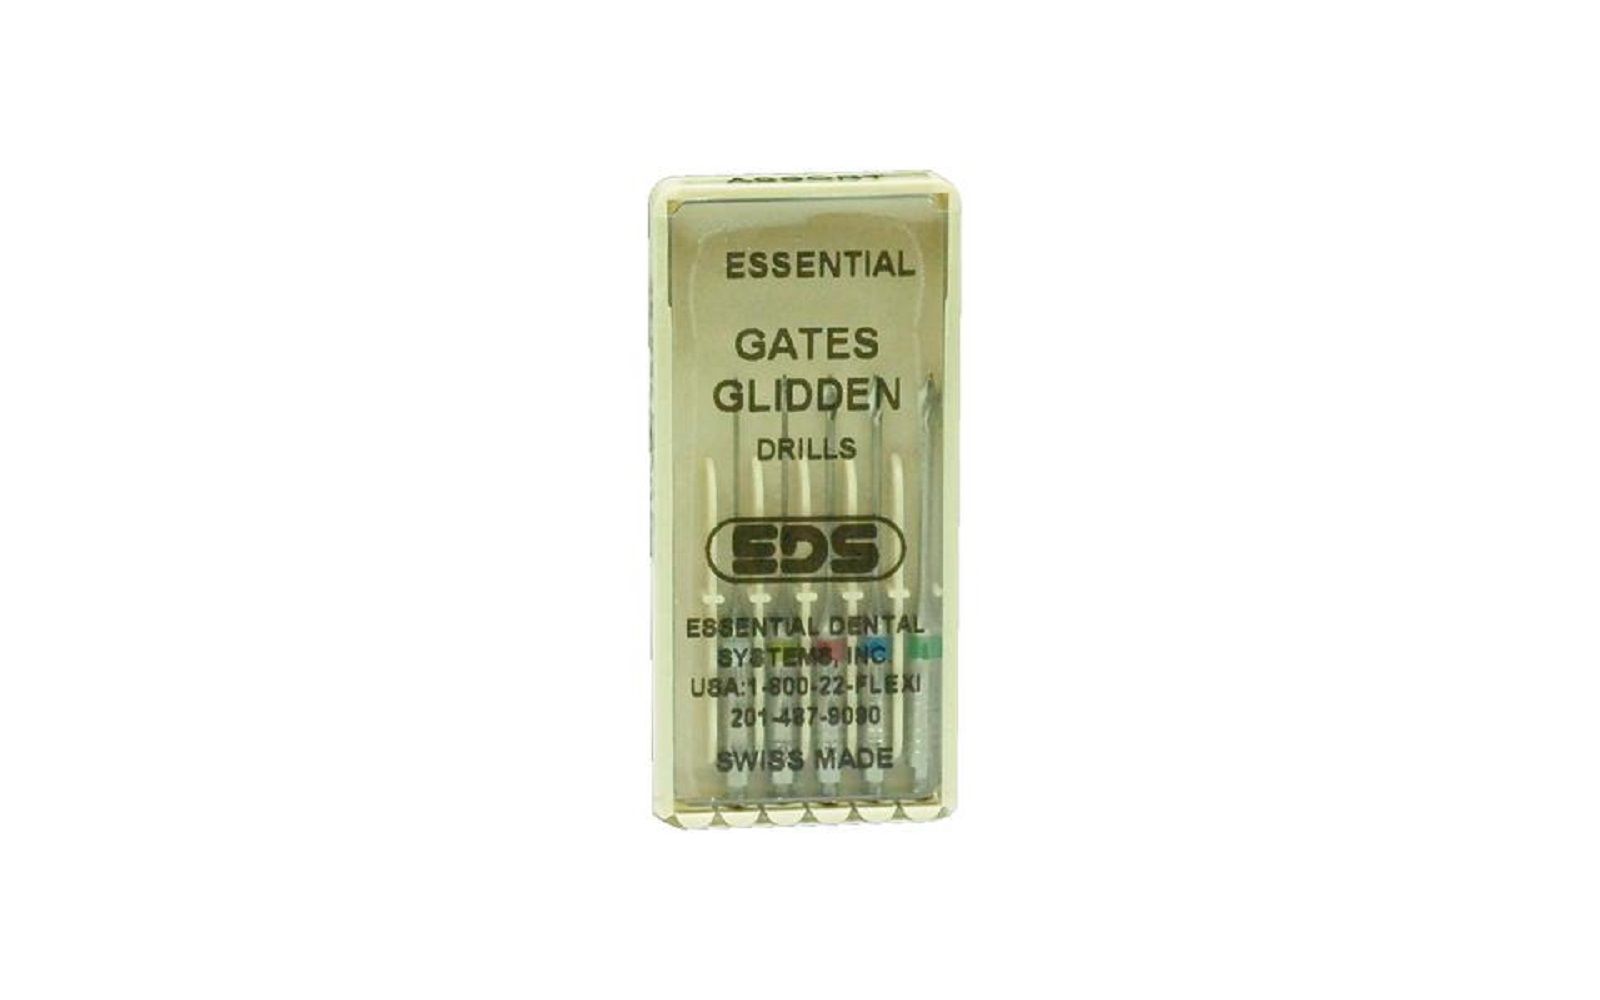 Essential gates glidden drills, 5/pkg - essential dental systems